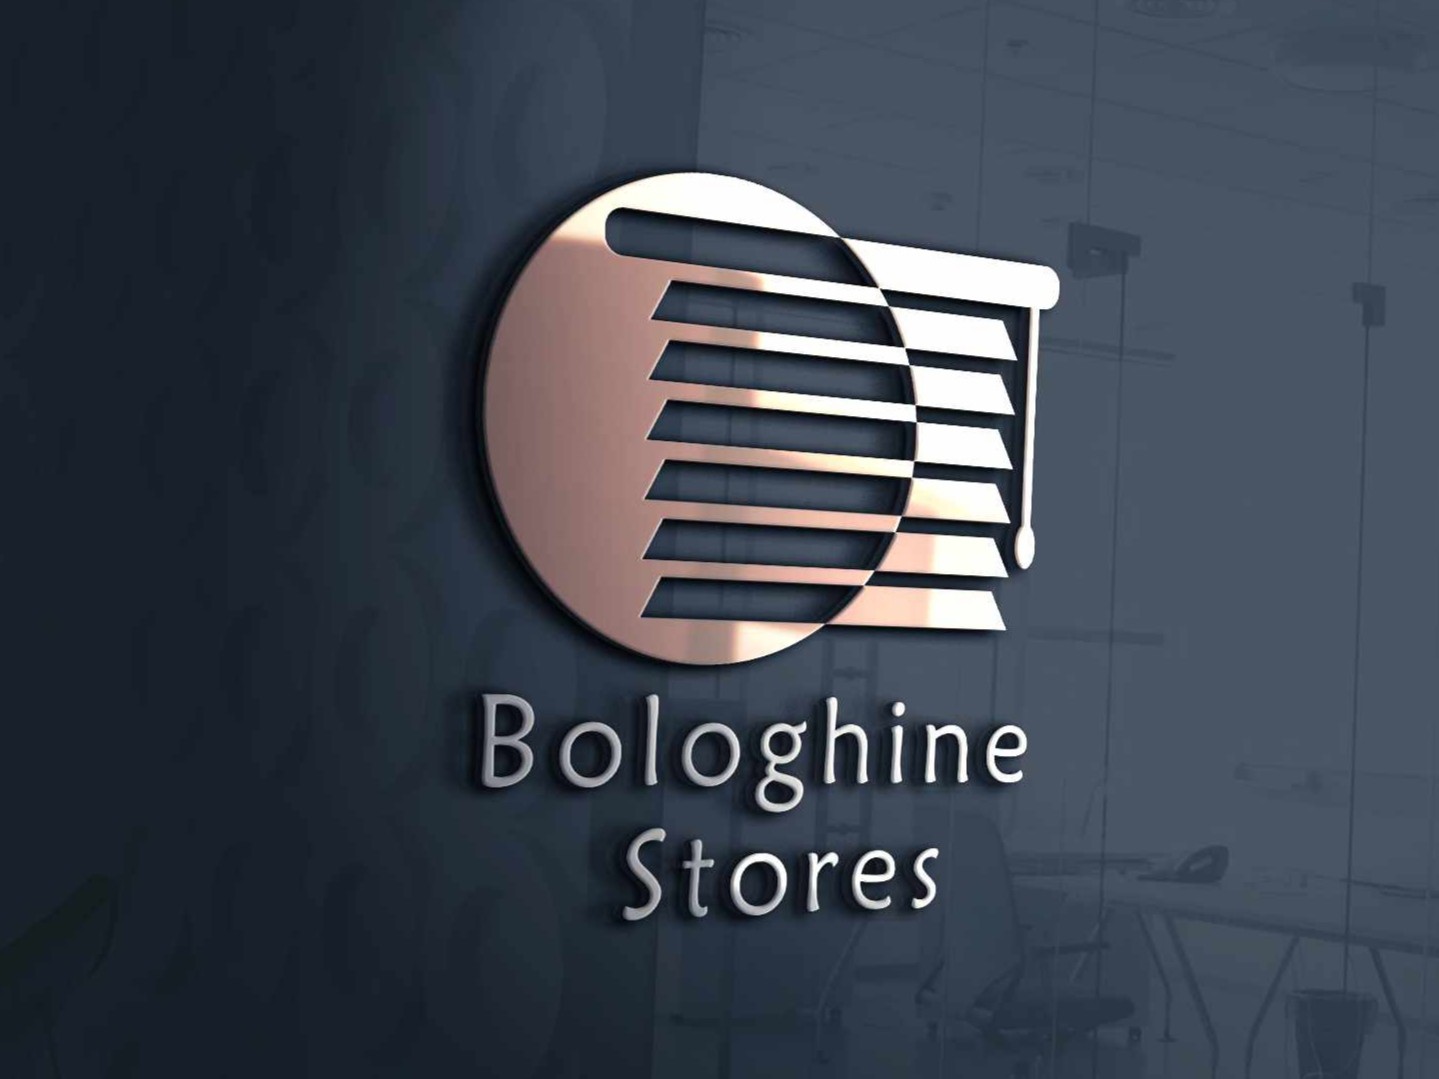 Bologhine Stores